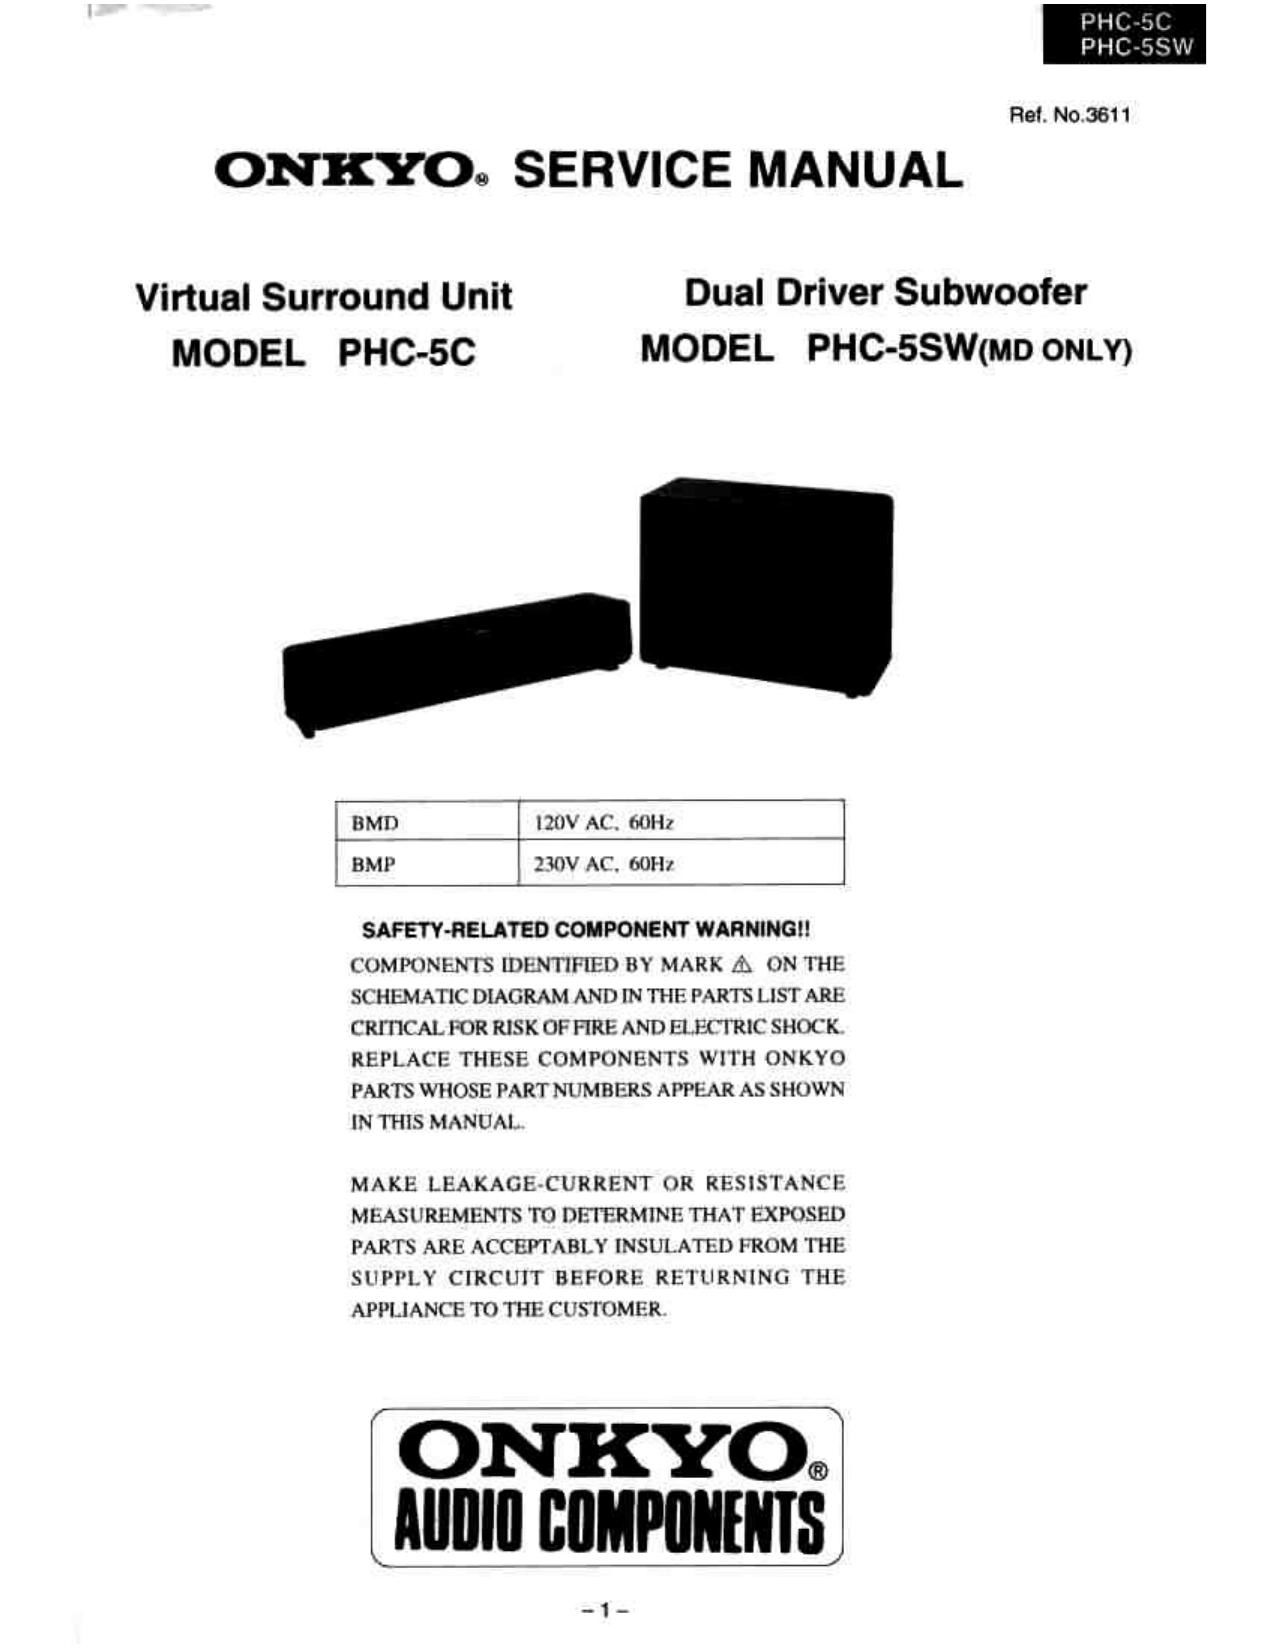 Onkyo PHC 5 CSW Service Manual